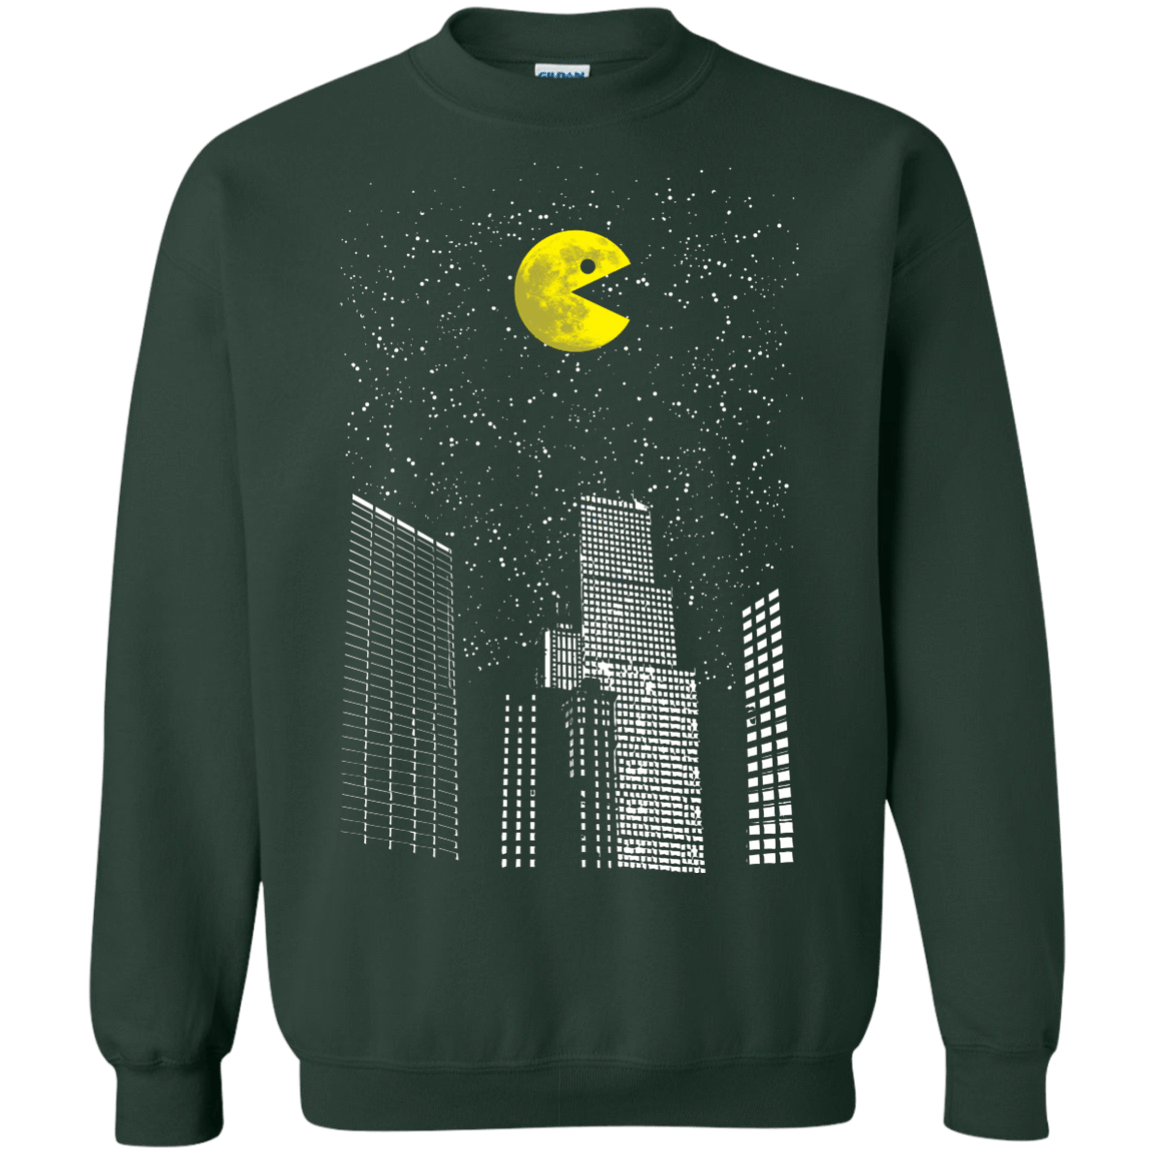 Sweatshirts Forest Green / S Pac-World Crewneck Sweatshirt